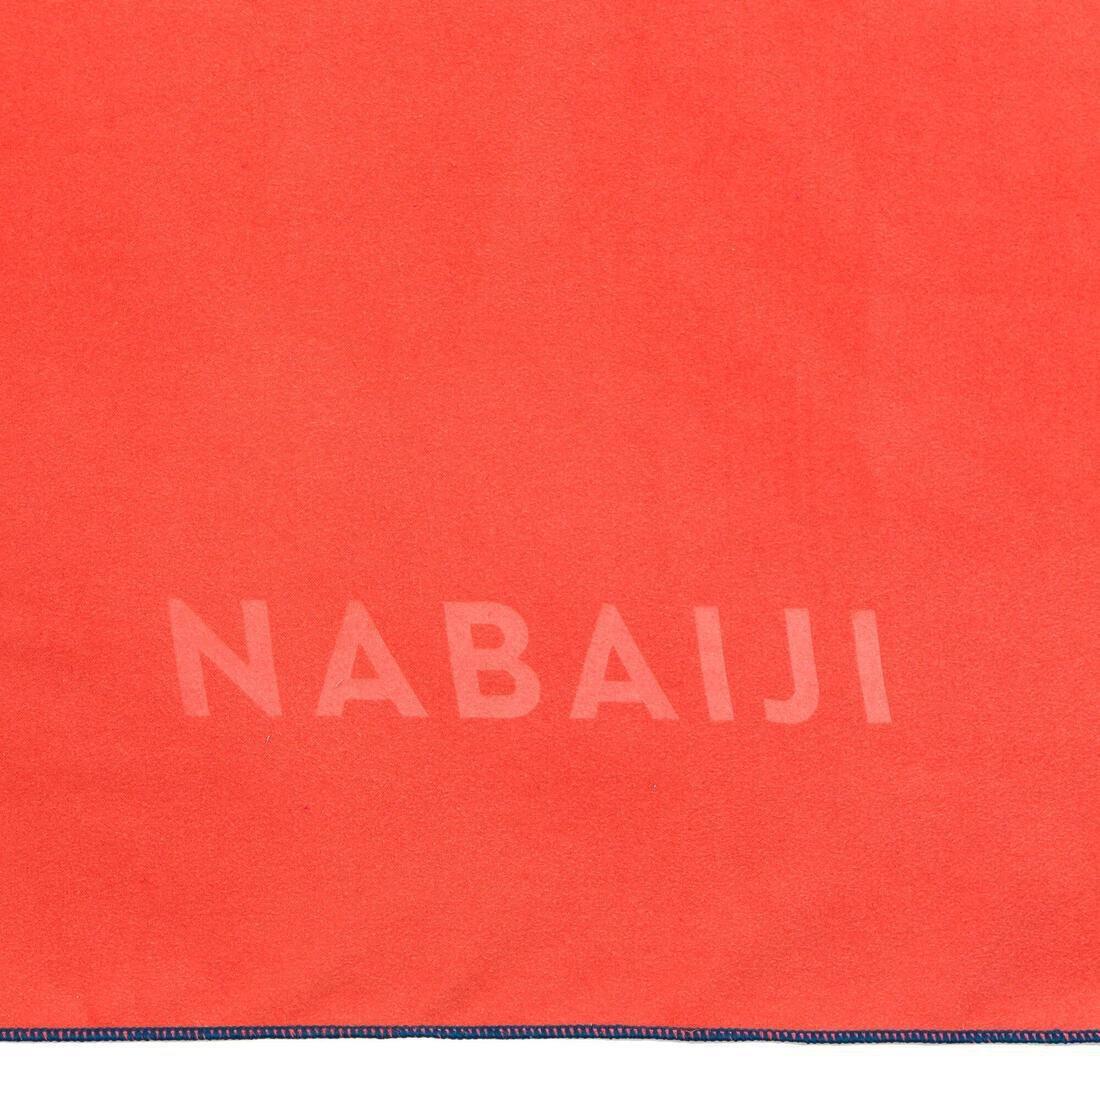 NABAIJI - Microfibre Pool Towel , Jungle Green